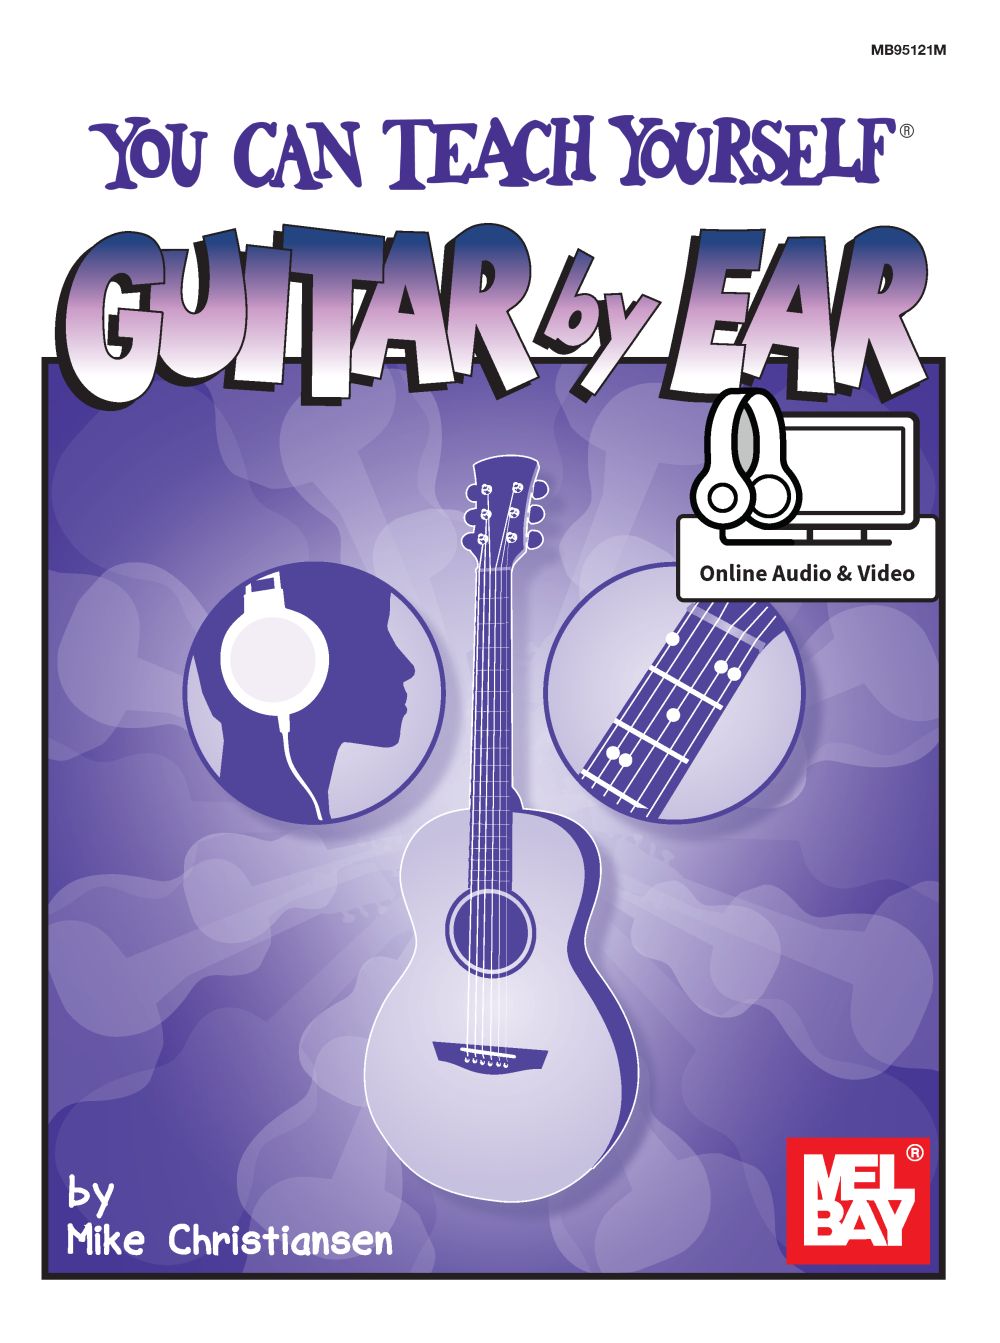 You Can Teach Yourself Guitar By Ear: Guitar: Instrumental Tutor